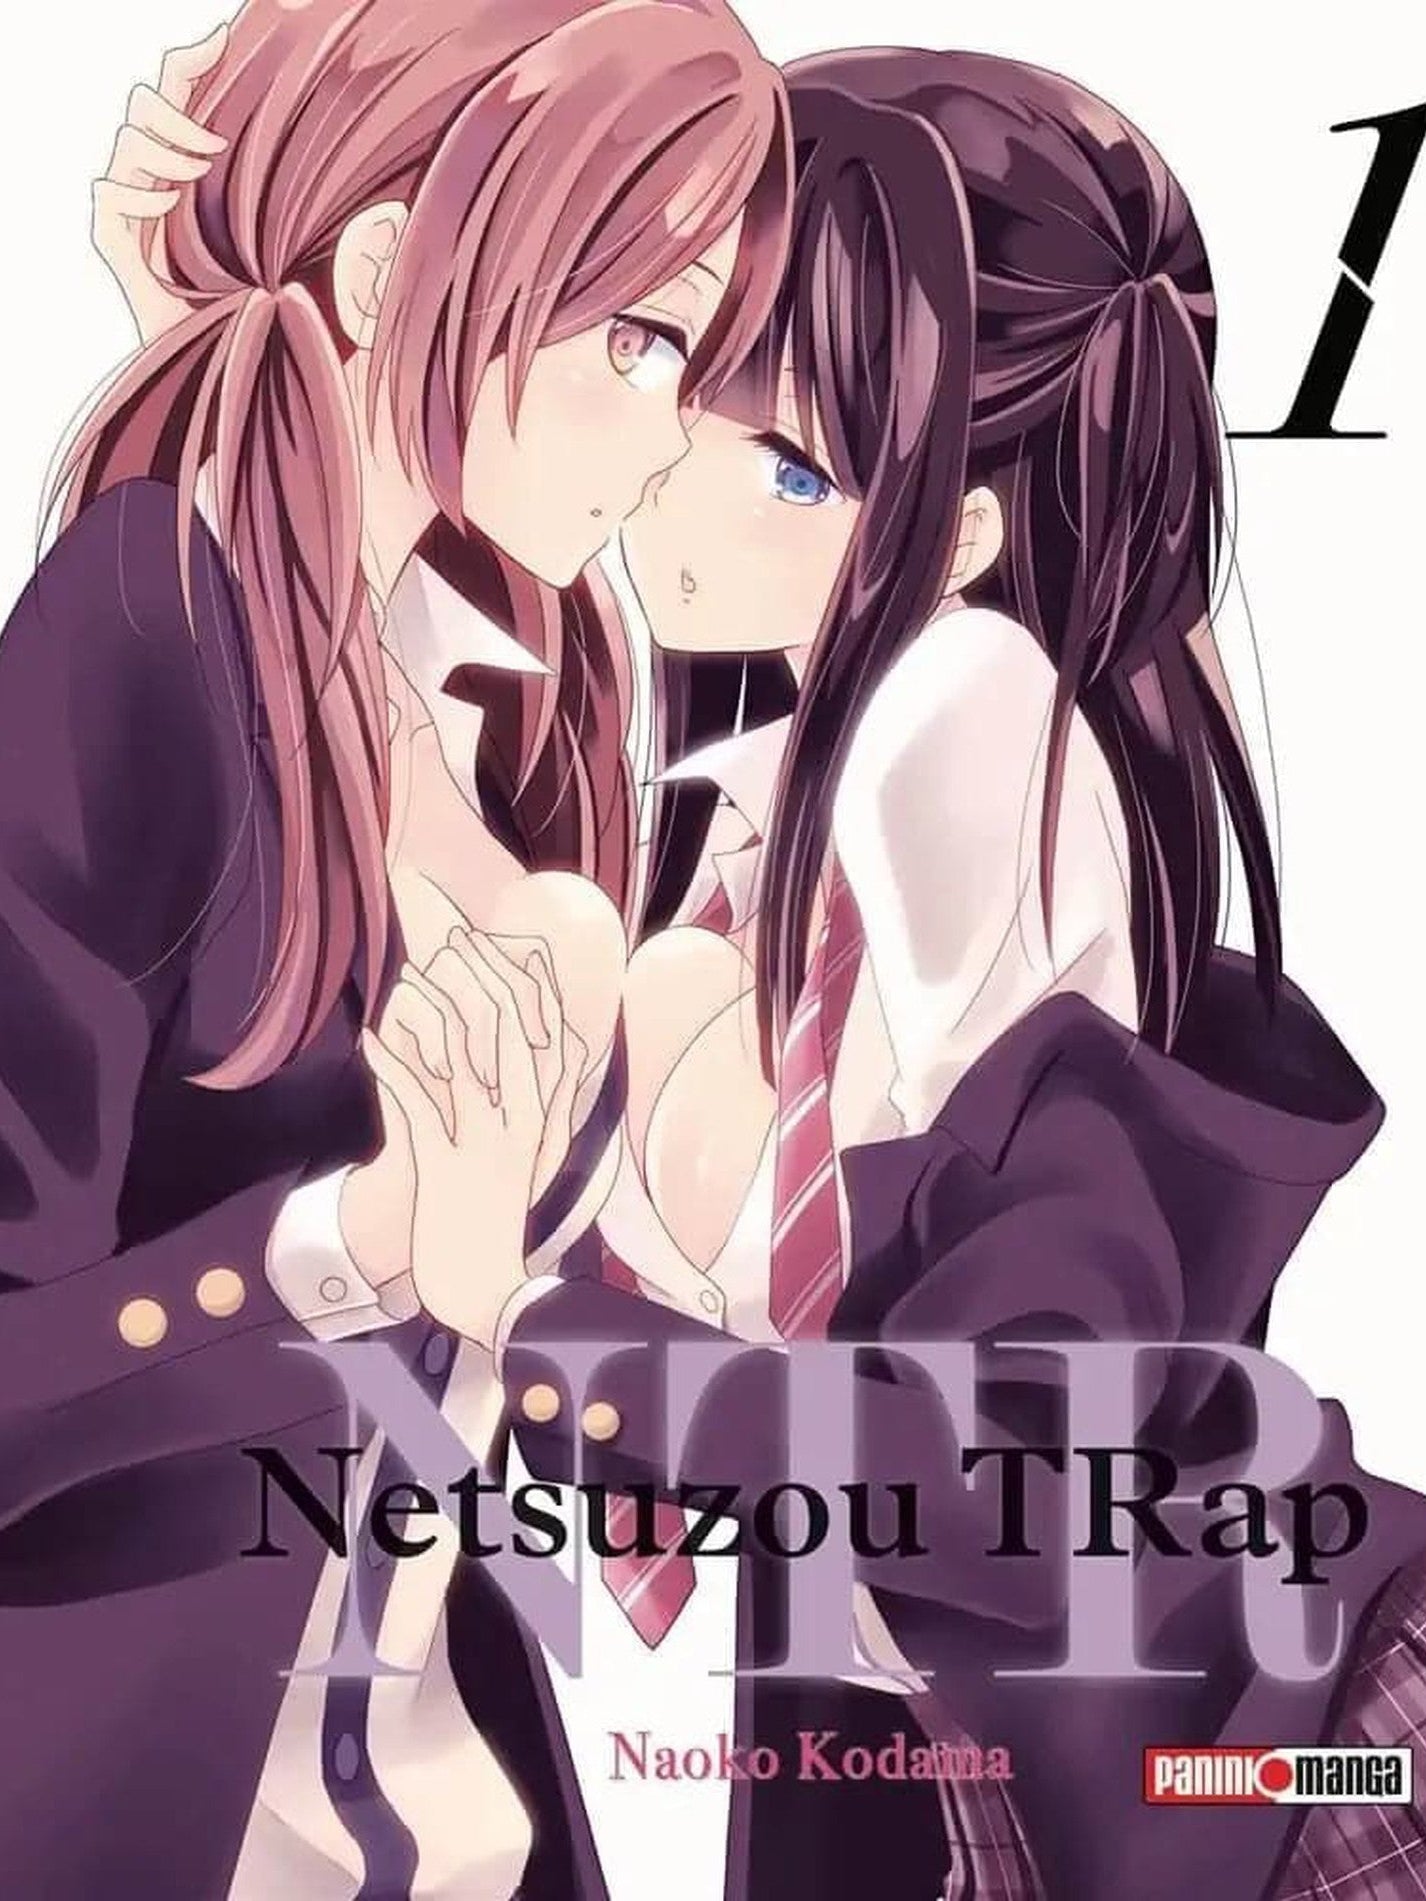 Ntr - Netsuzo Trap #1